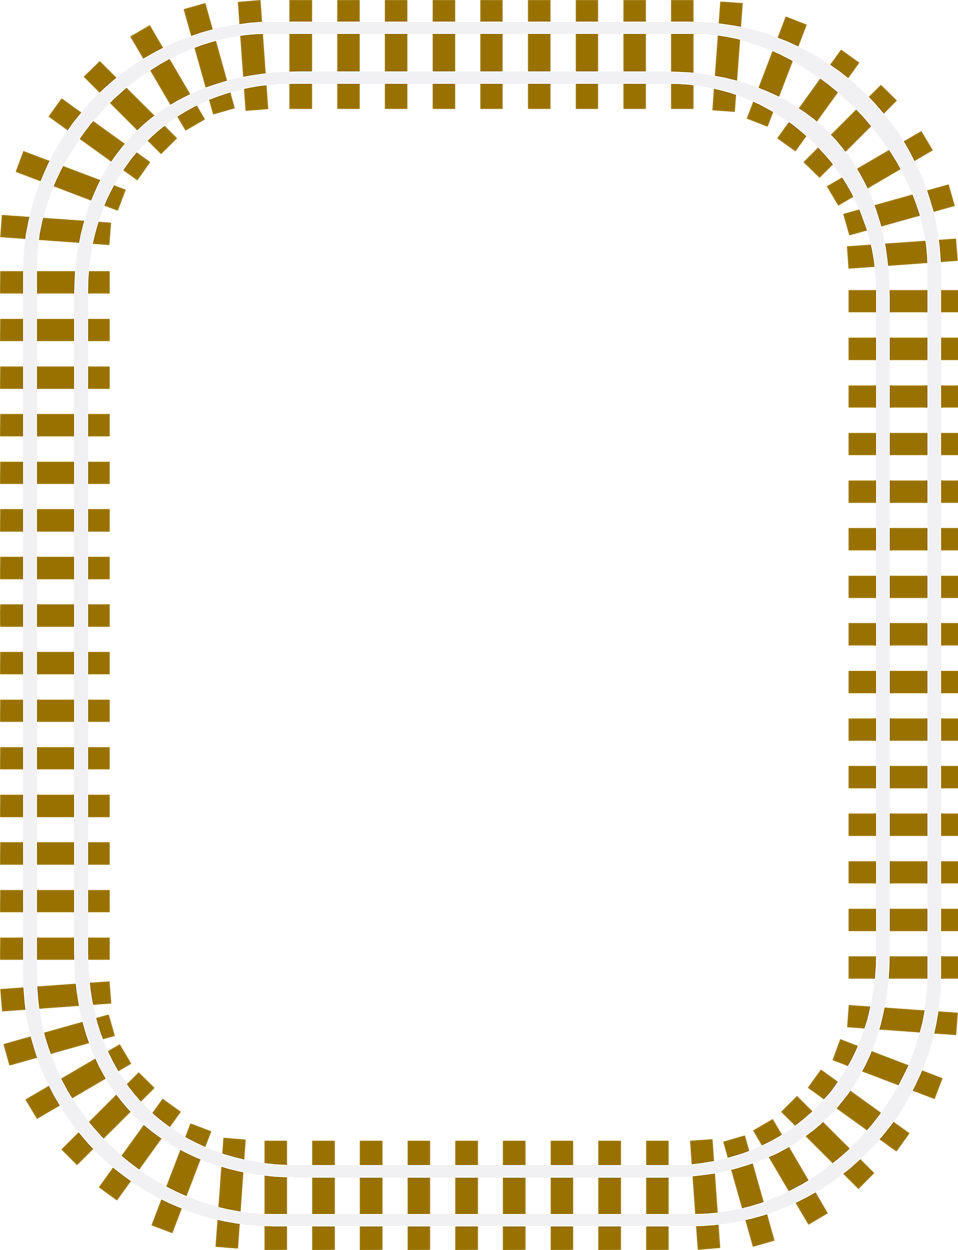 Illustration of a blank railroad track fraem border.